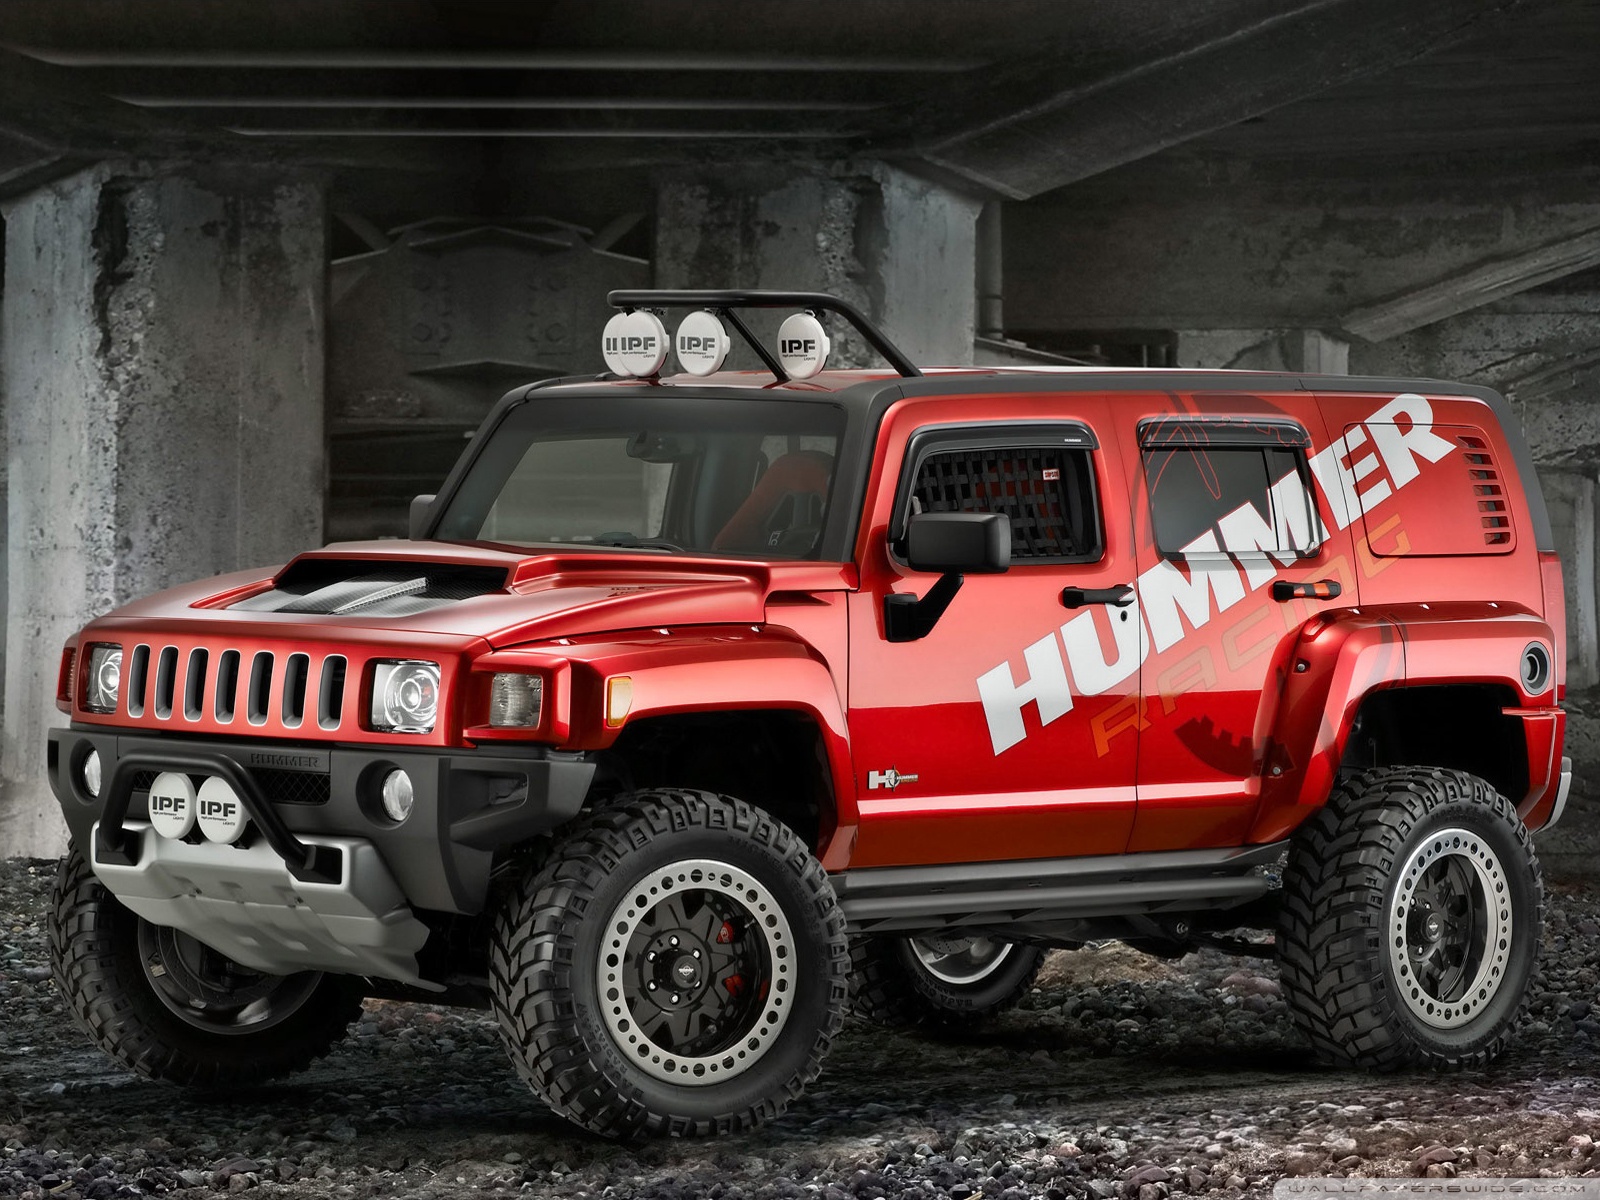 Standard - Red Hummer H3 2018 , HD Wallpaper & Backgrounds